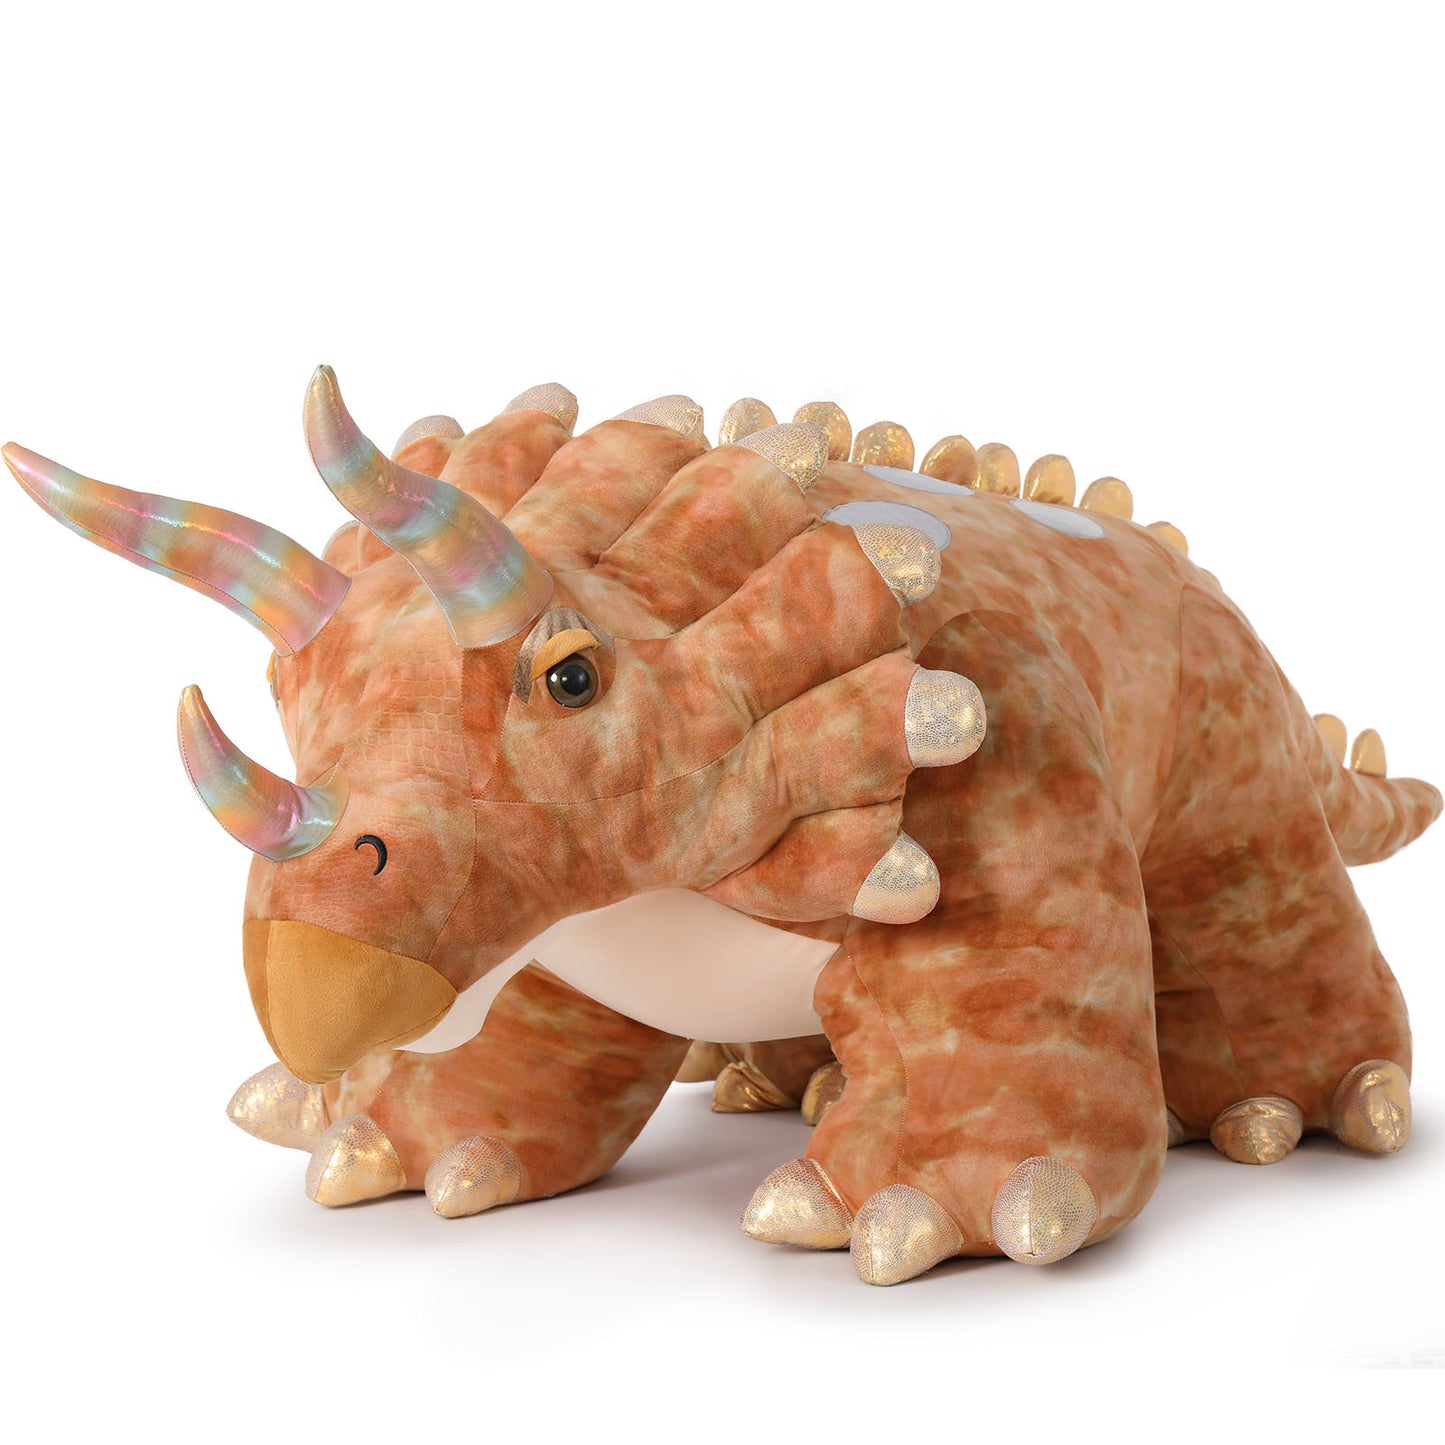 Huge Triceratops Plush Toy Dino Stuffed Animals, 6.4 FT - MorisMos Stuffed Animals - Free Shipping - Life Size Plush Toys